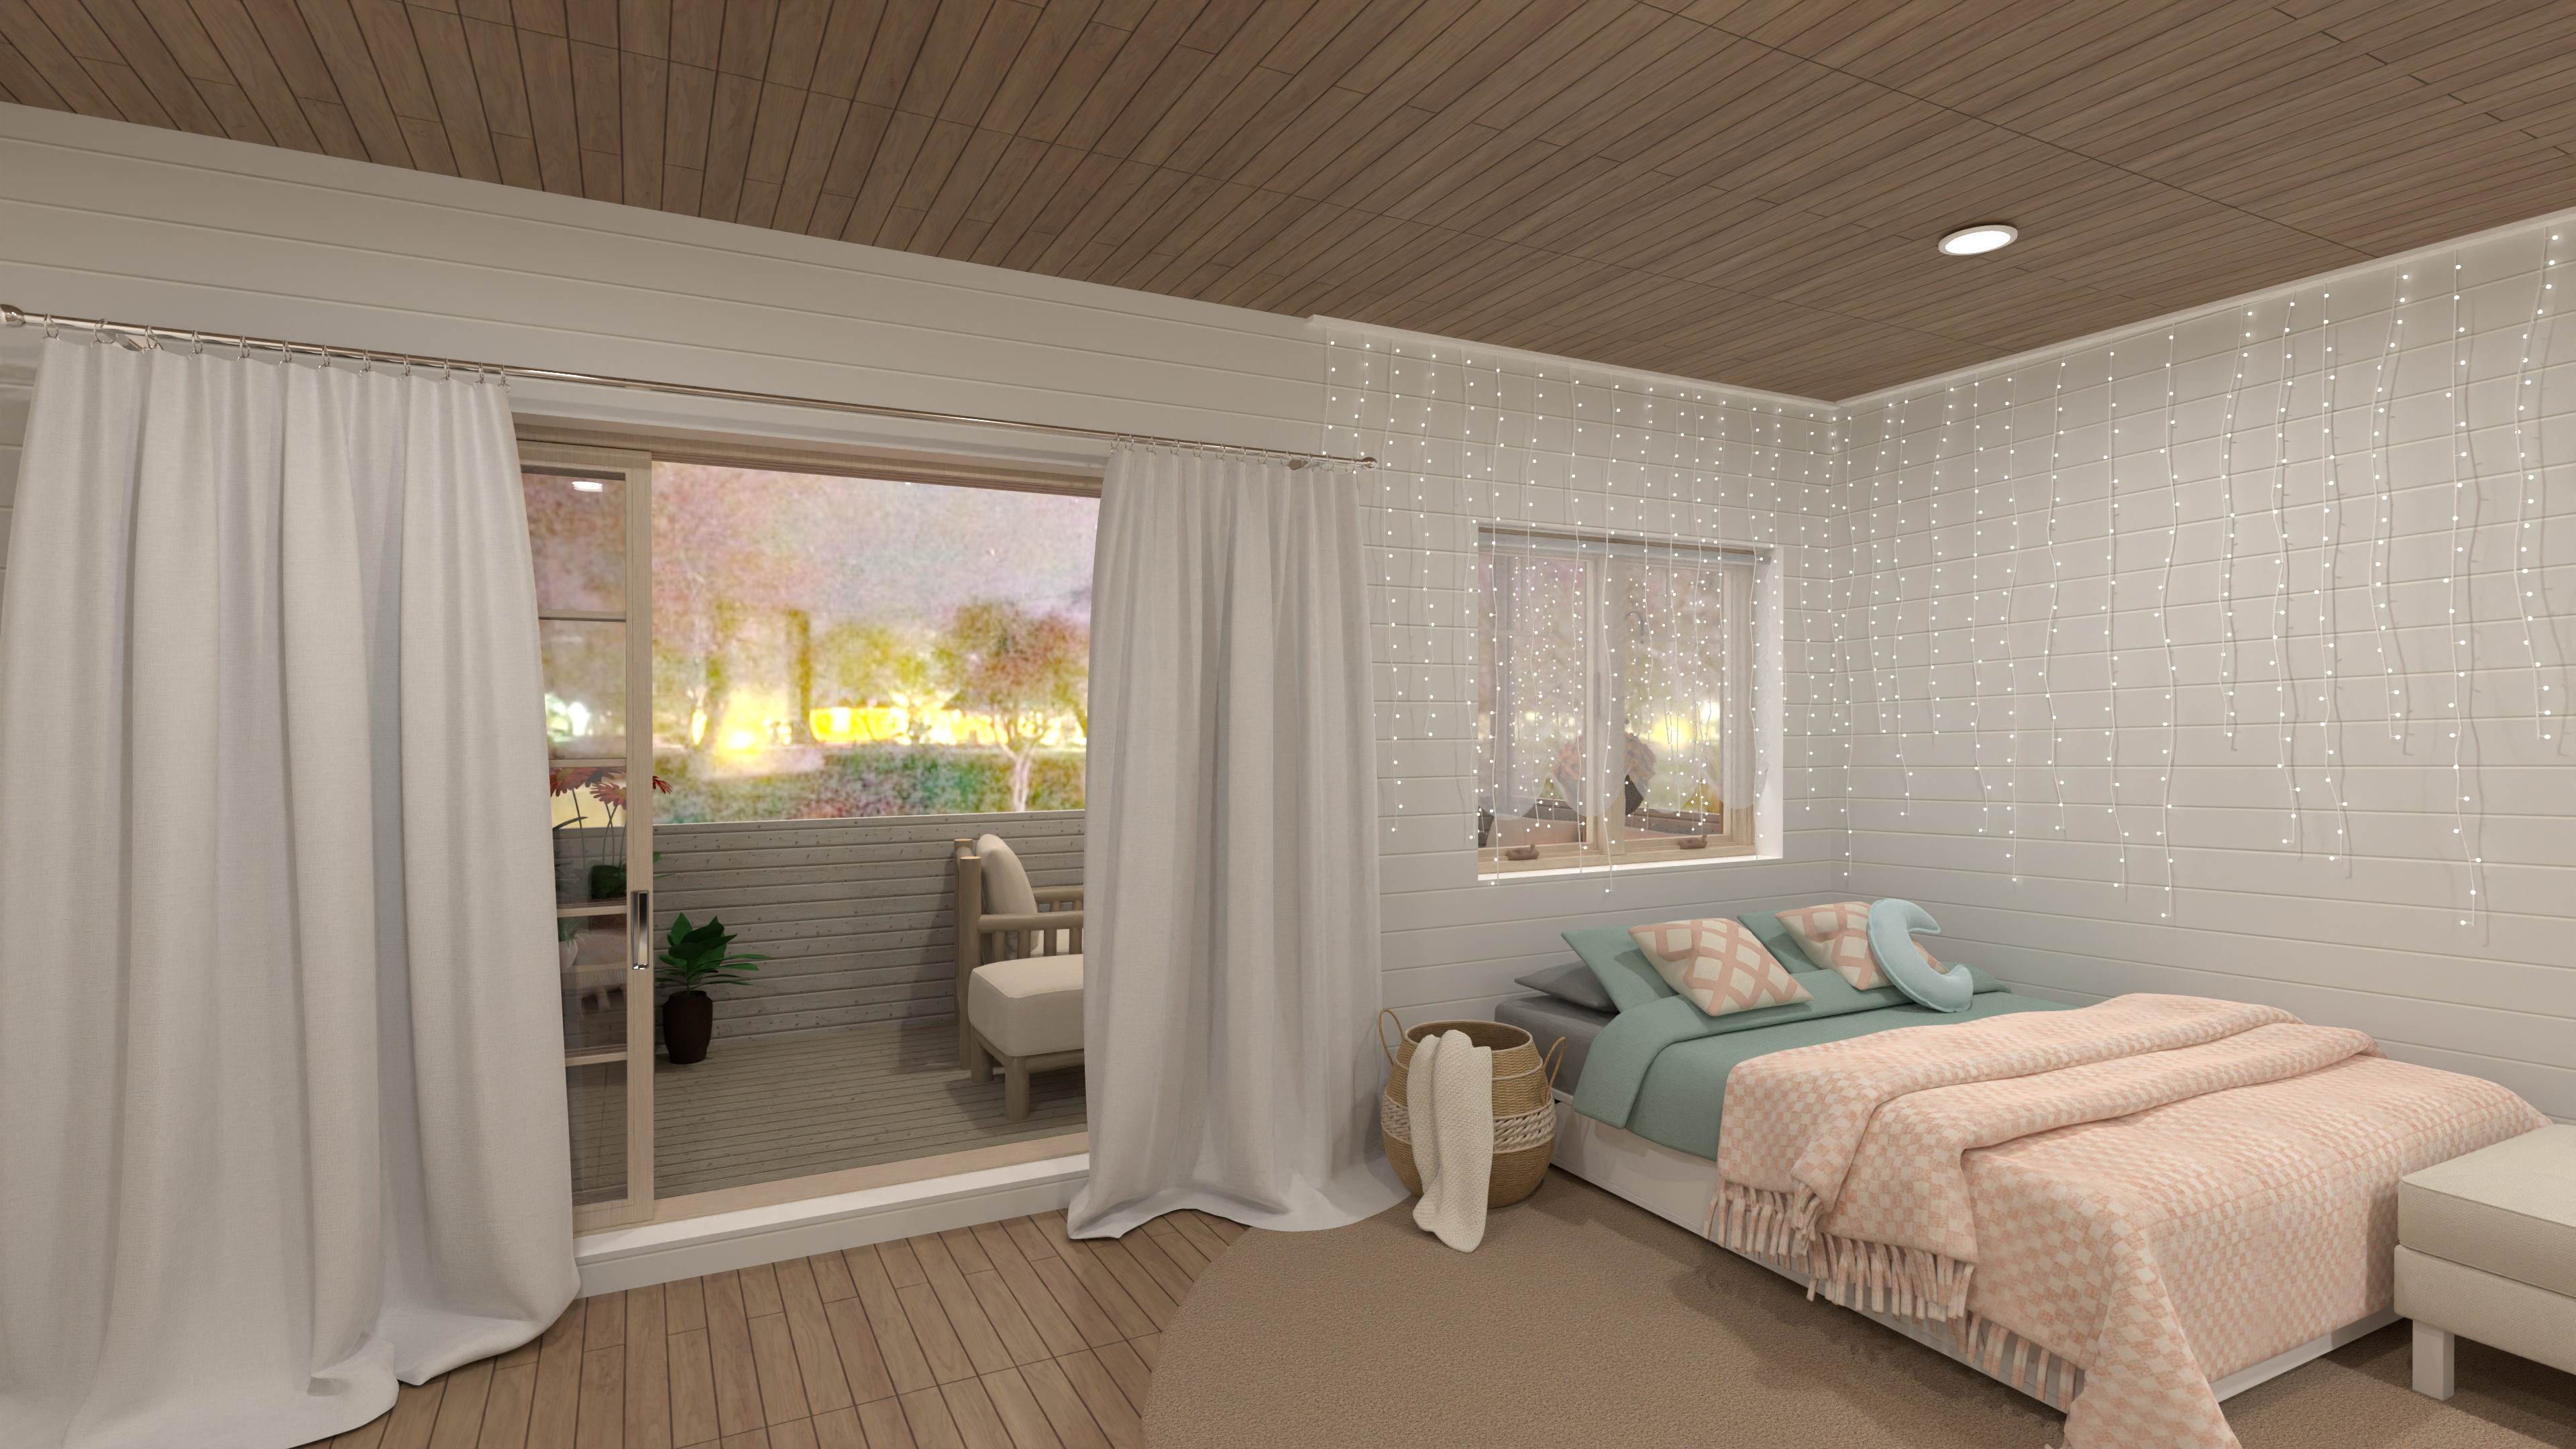 cottage style master bedroom 20592215 by Dellen image